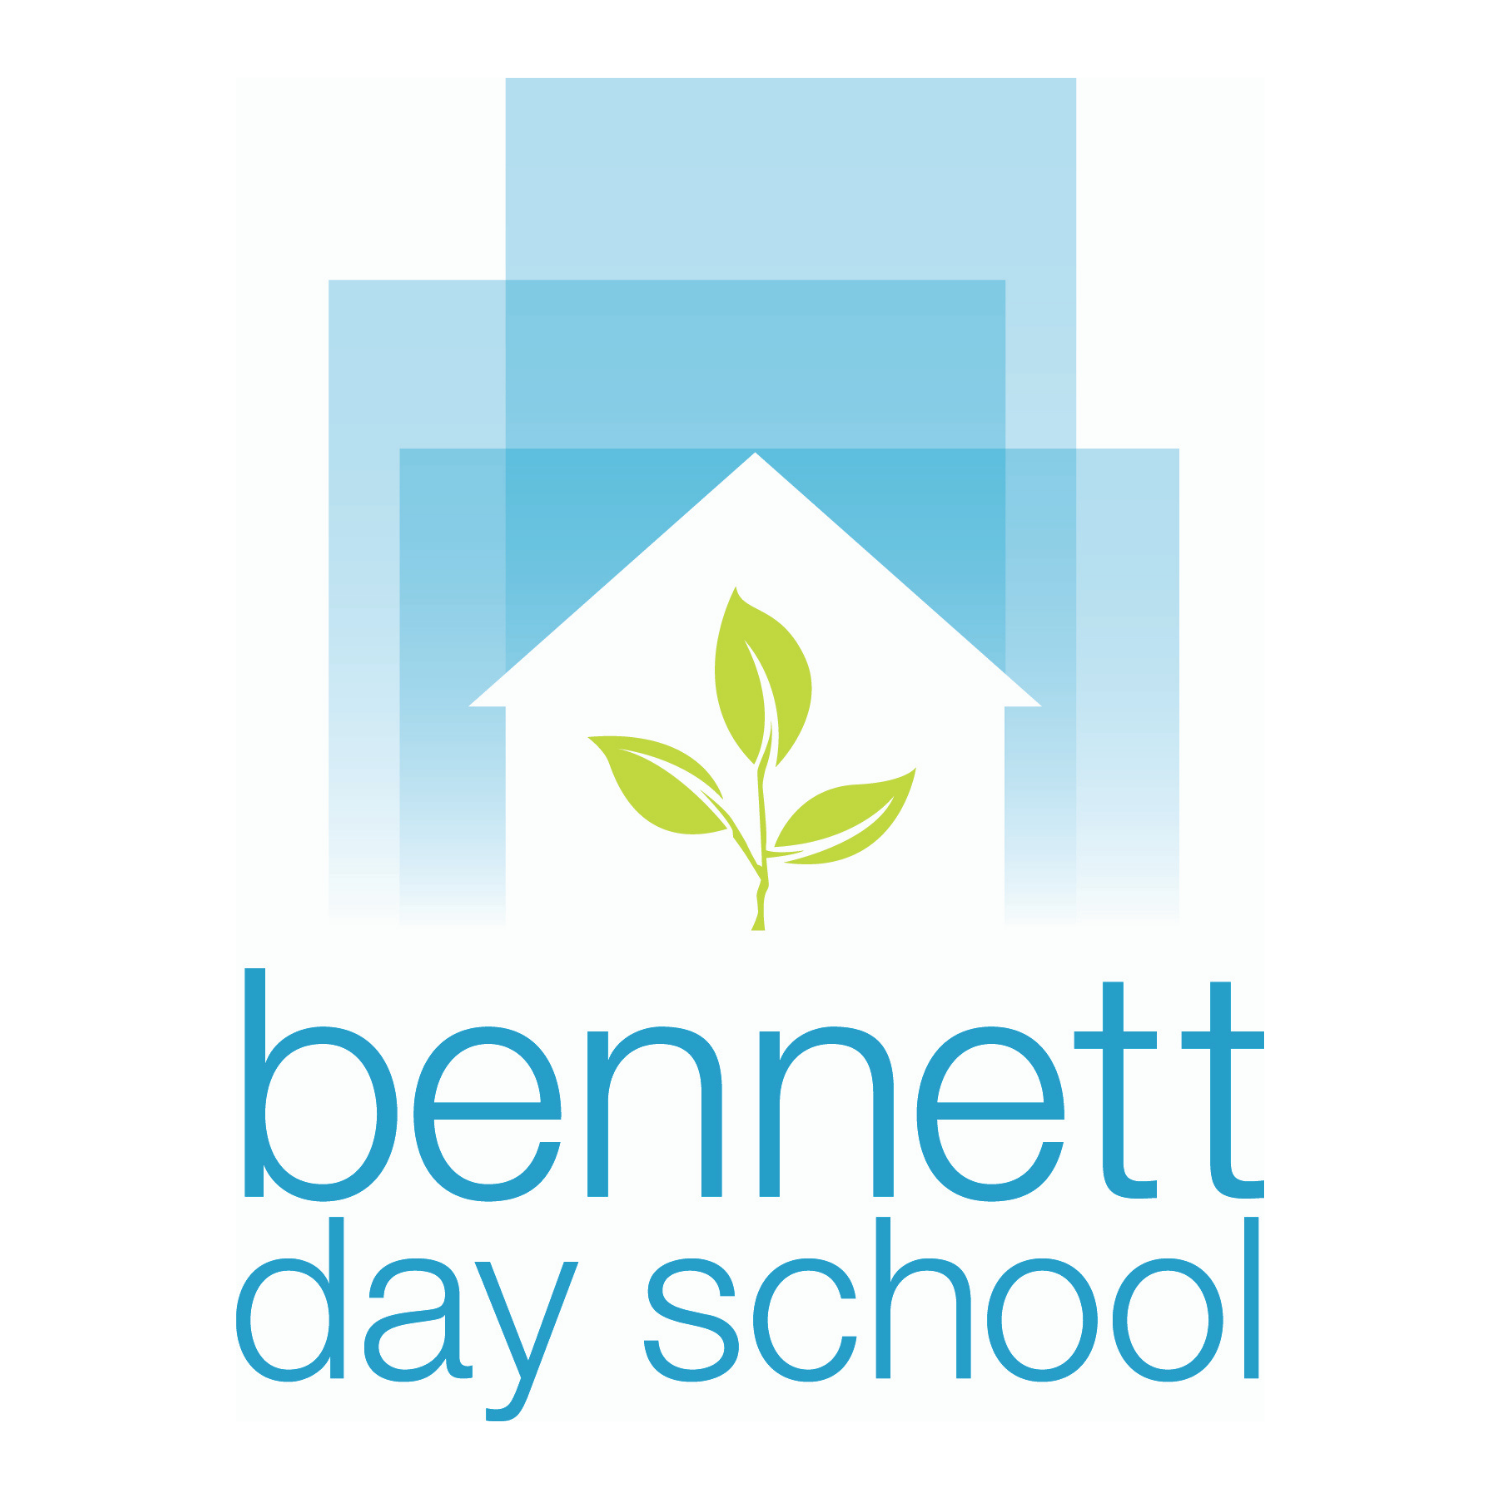 Bennett Day School - Chicago, IL 60642 - (312)236-6388 | ShowMeLocal.com